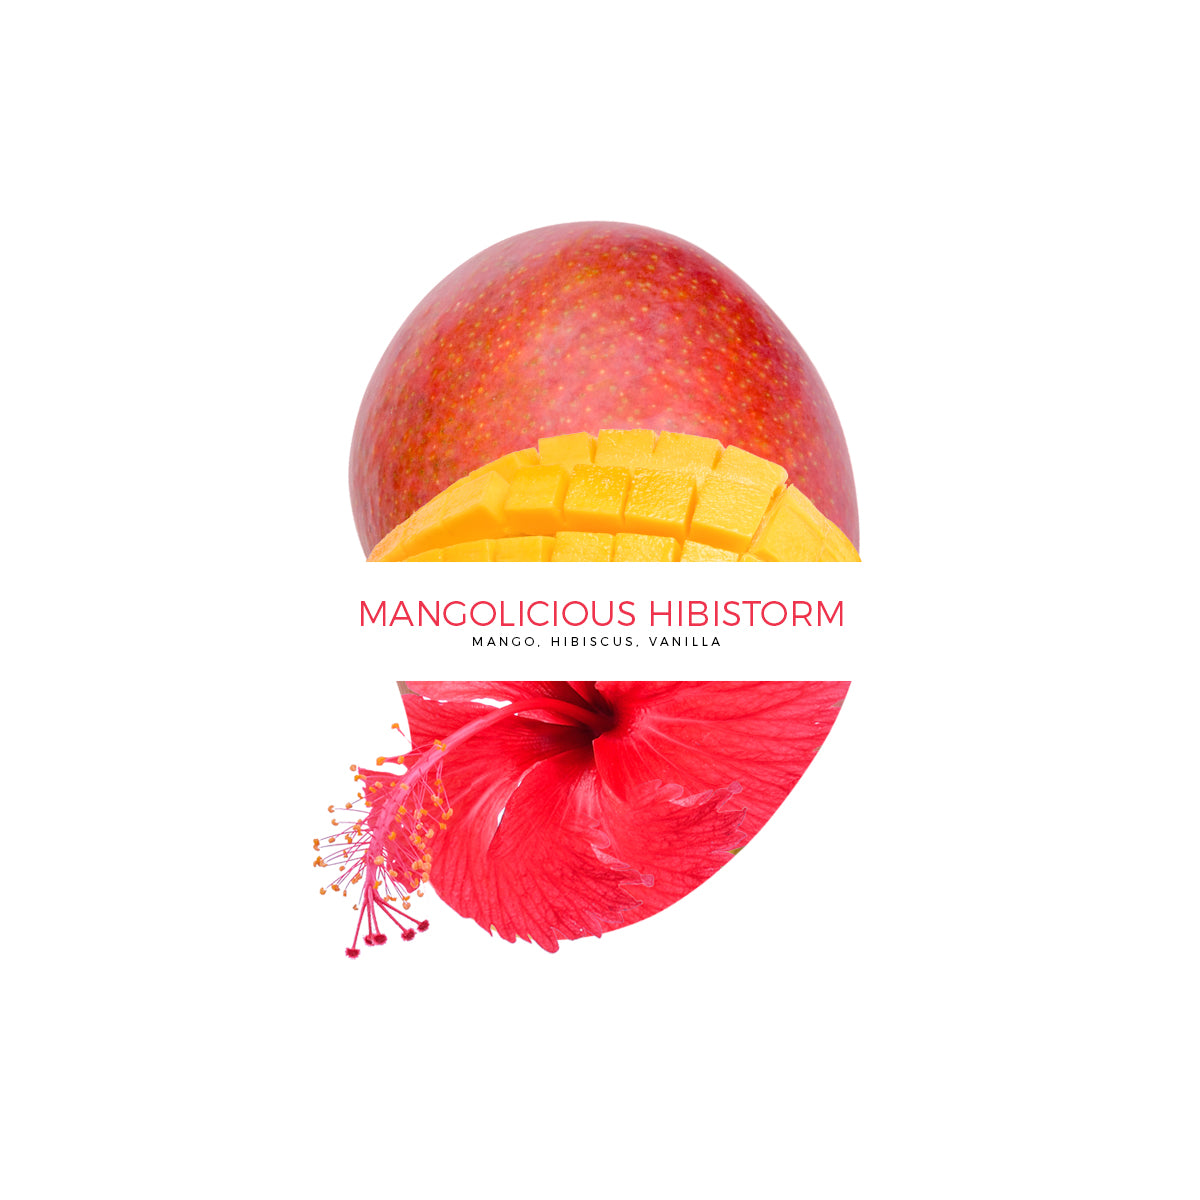 Mangolicious Hibistorm